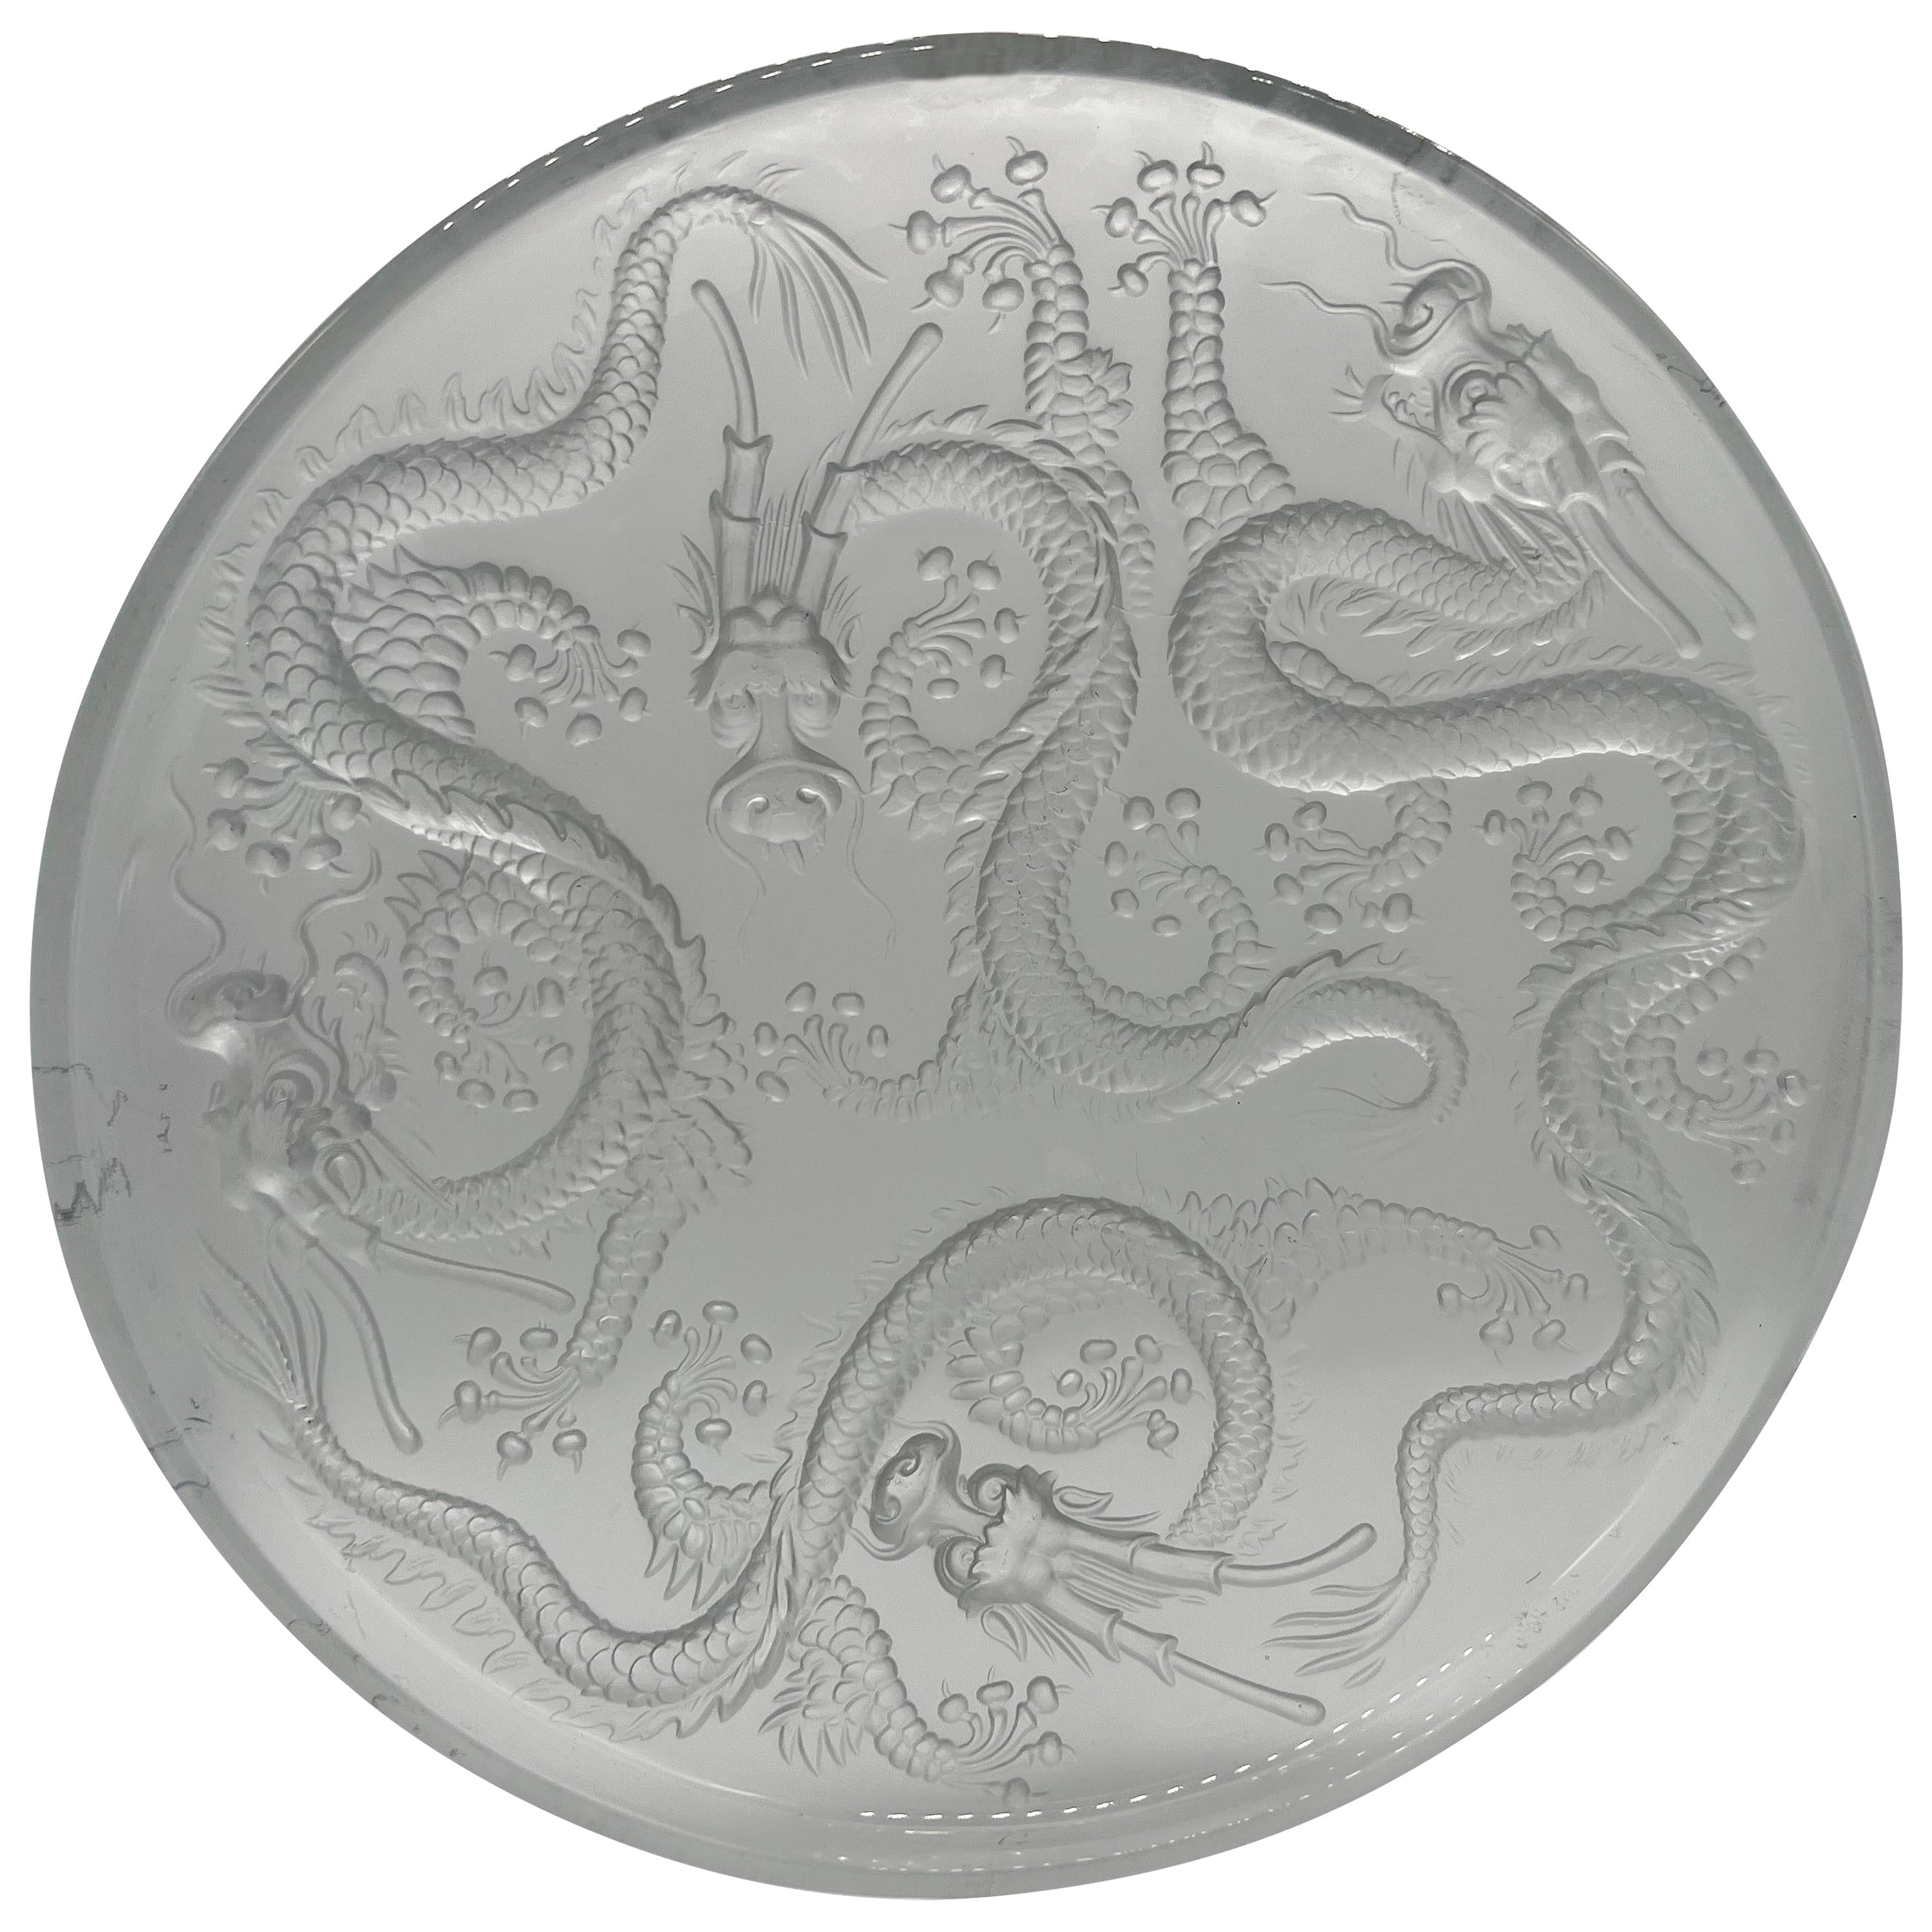 Große Josef Inwald Kunstglasplatte mit 5 Claw Dragon - Barolac Glass